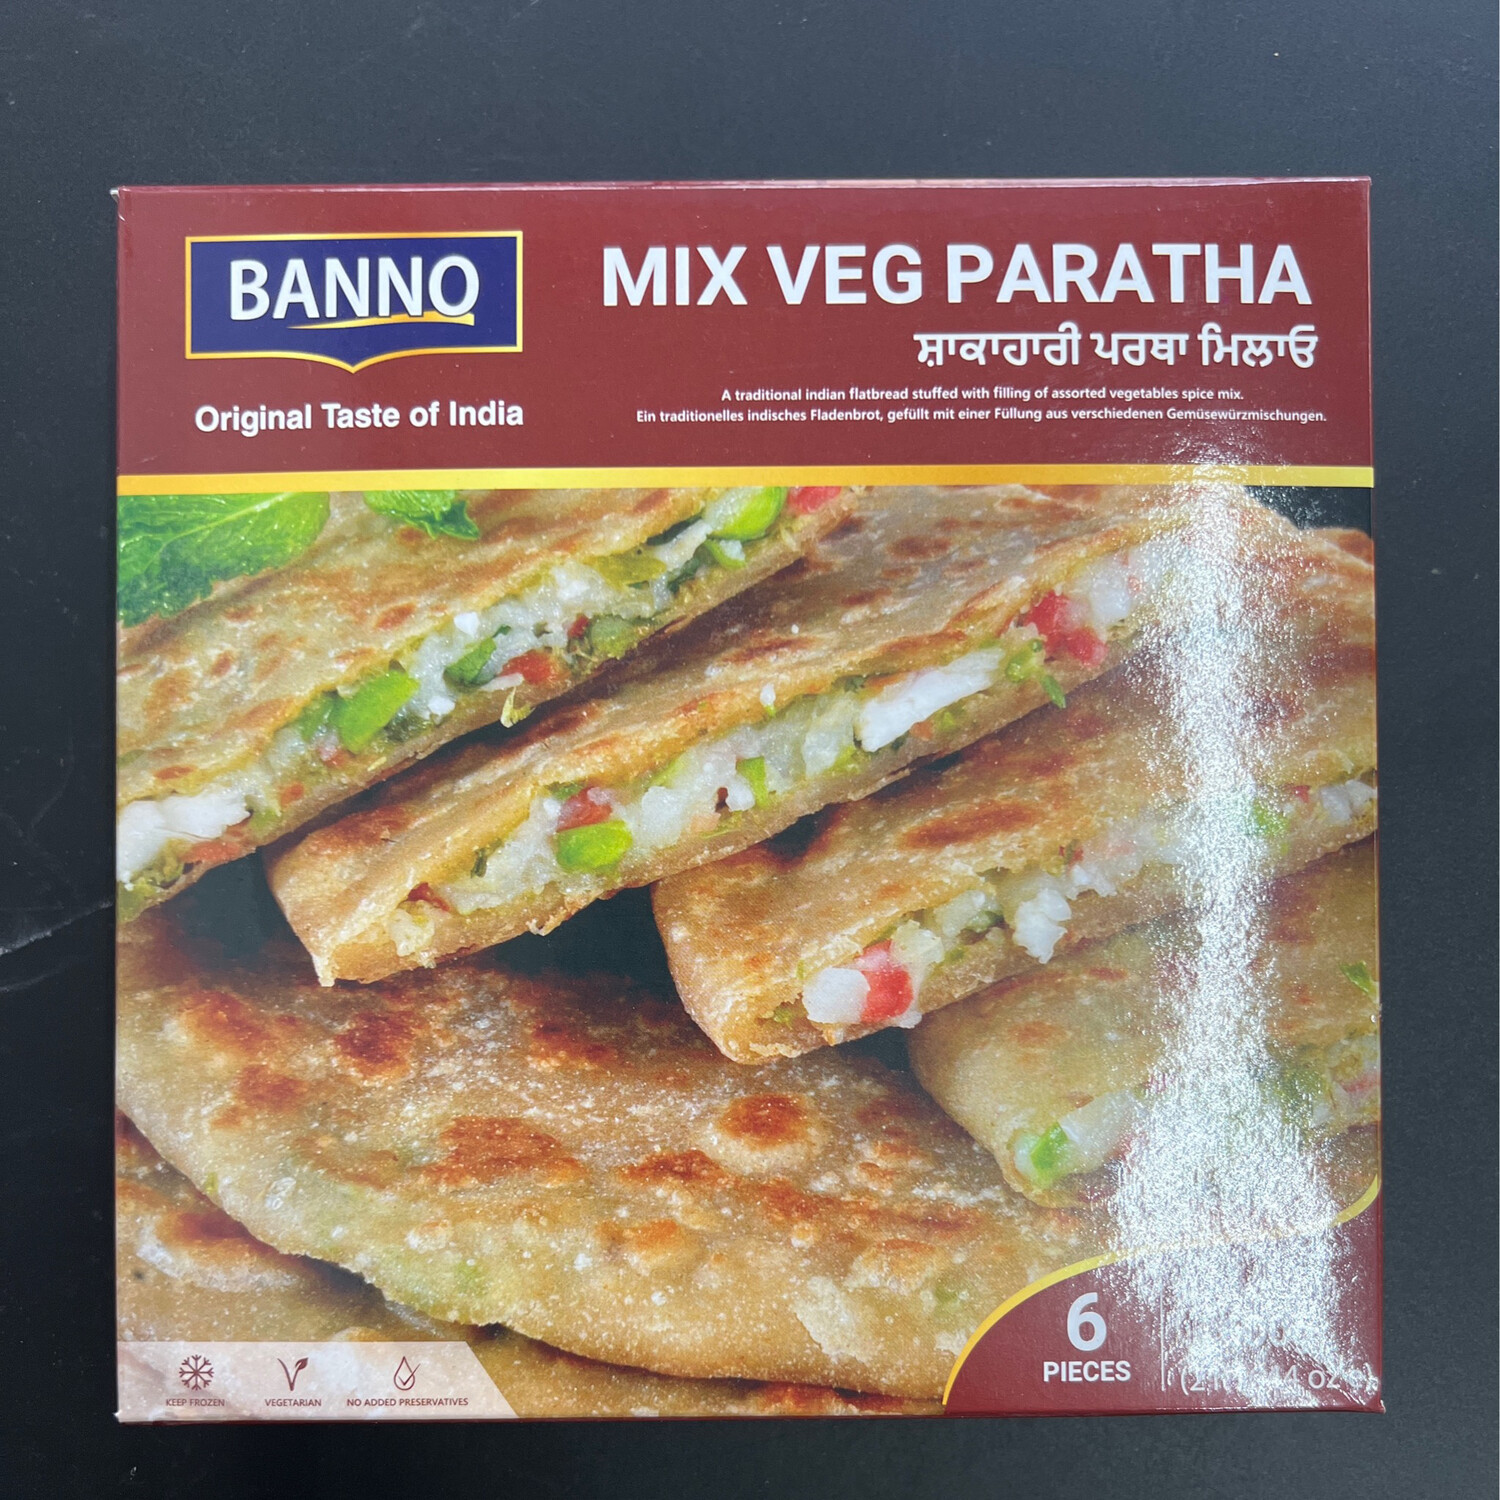 Banno Mix VEG Paratha 6pcs 480g